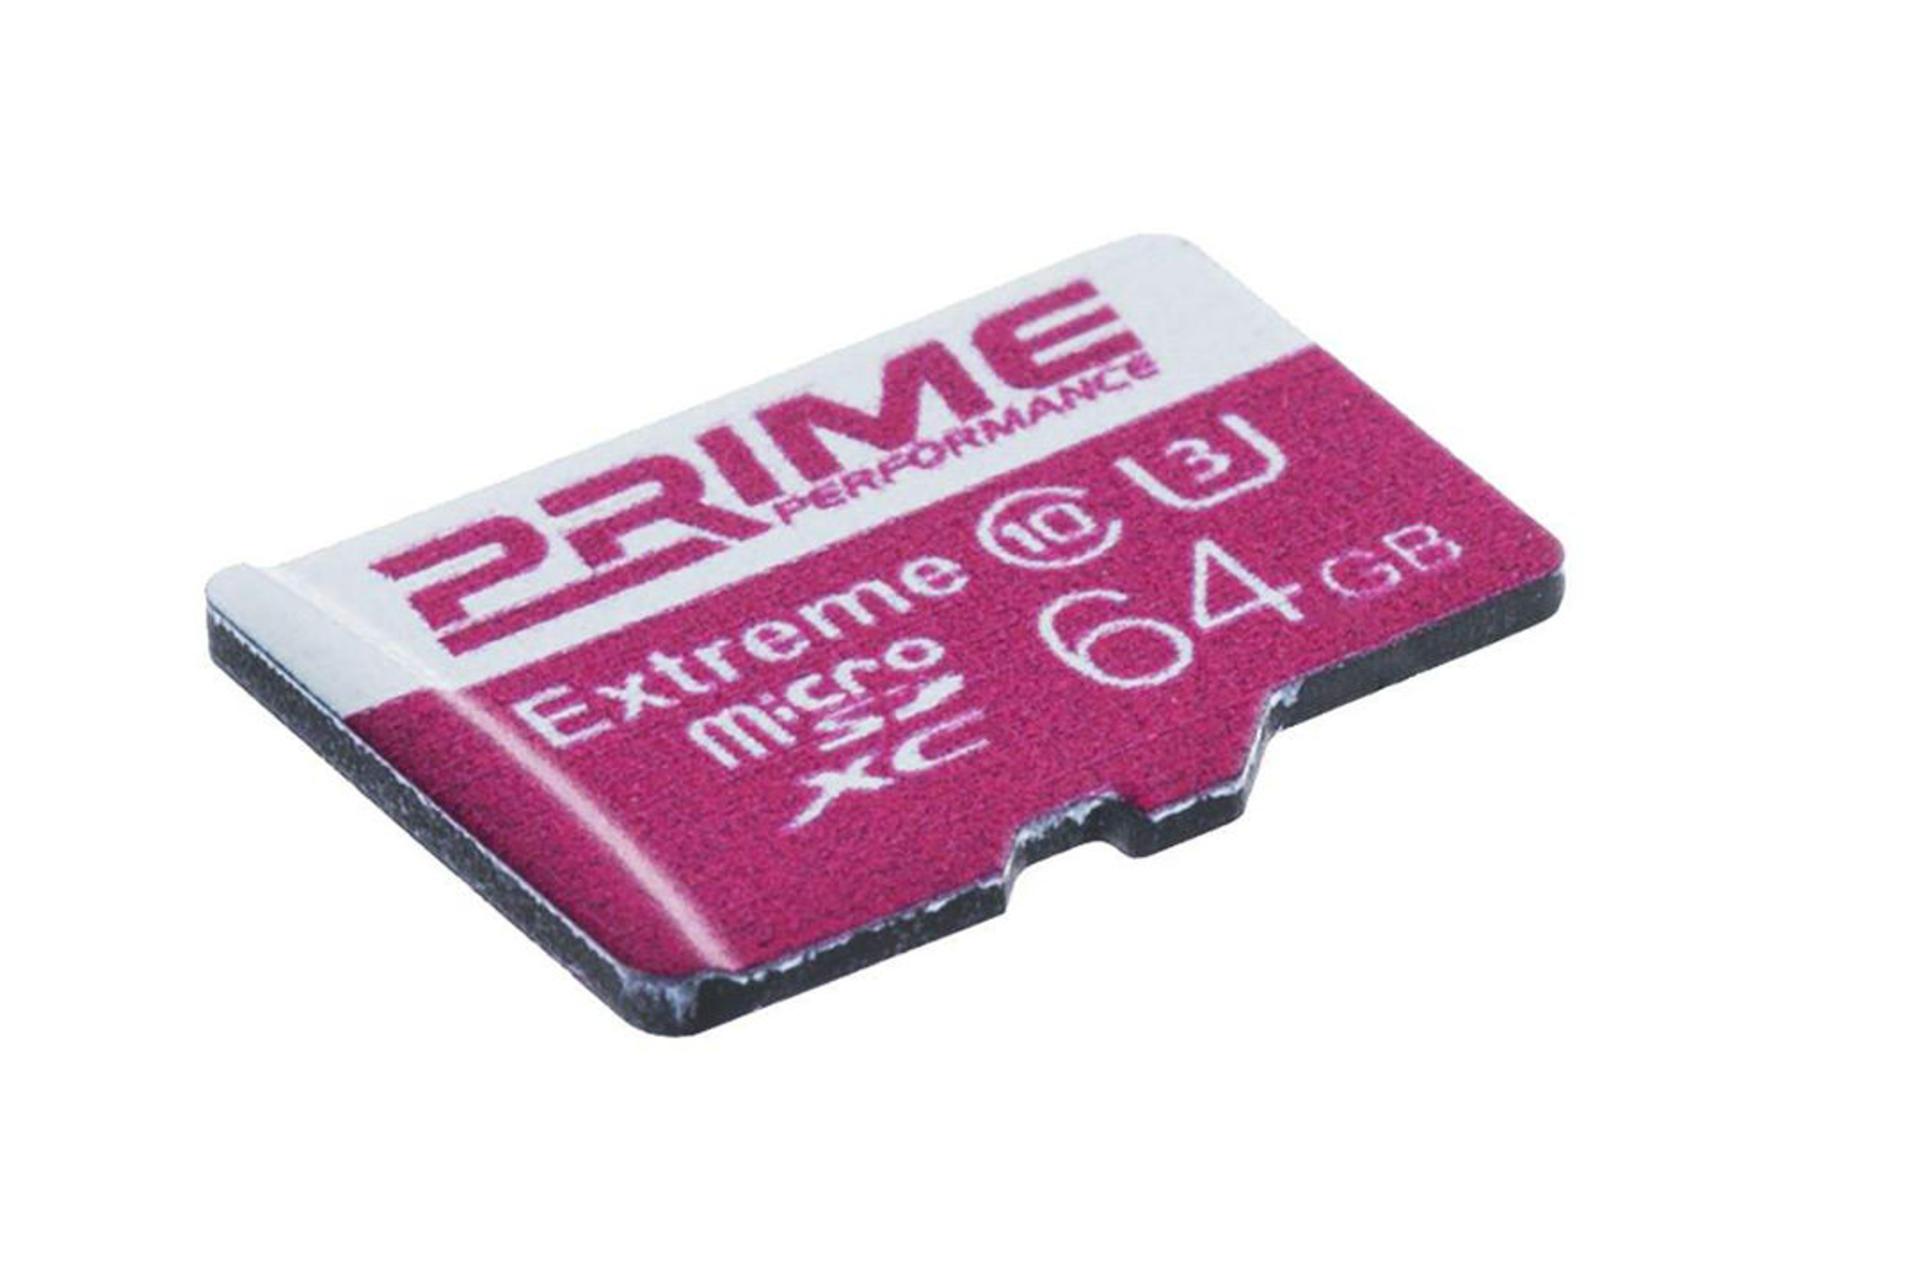 Prime Extreme microSDXC Class 10 UHS-U3 64GB